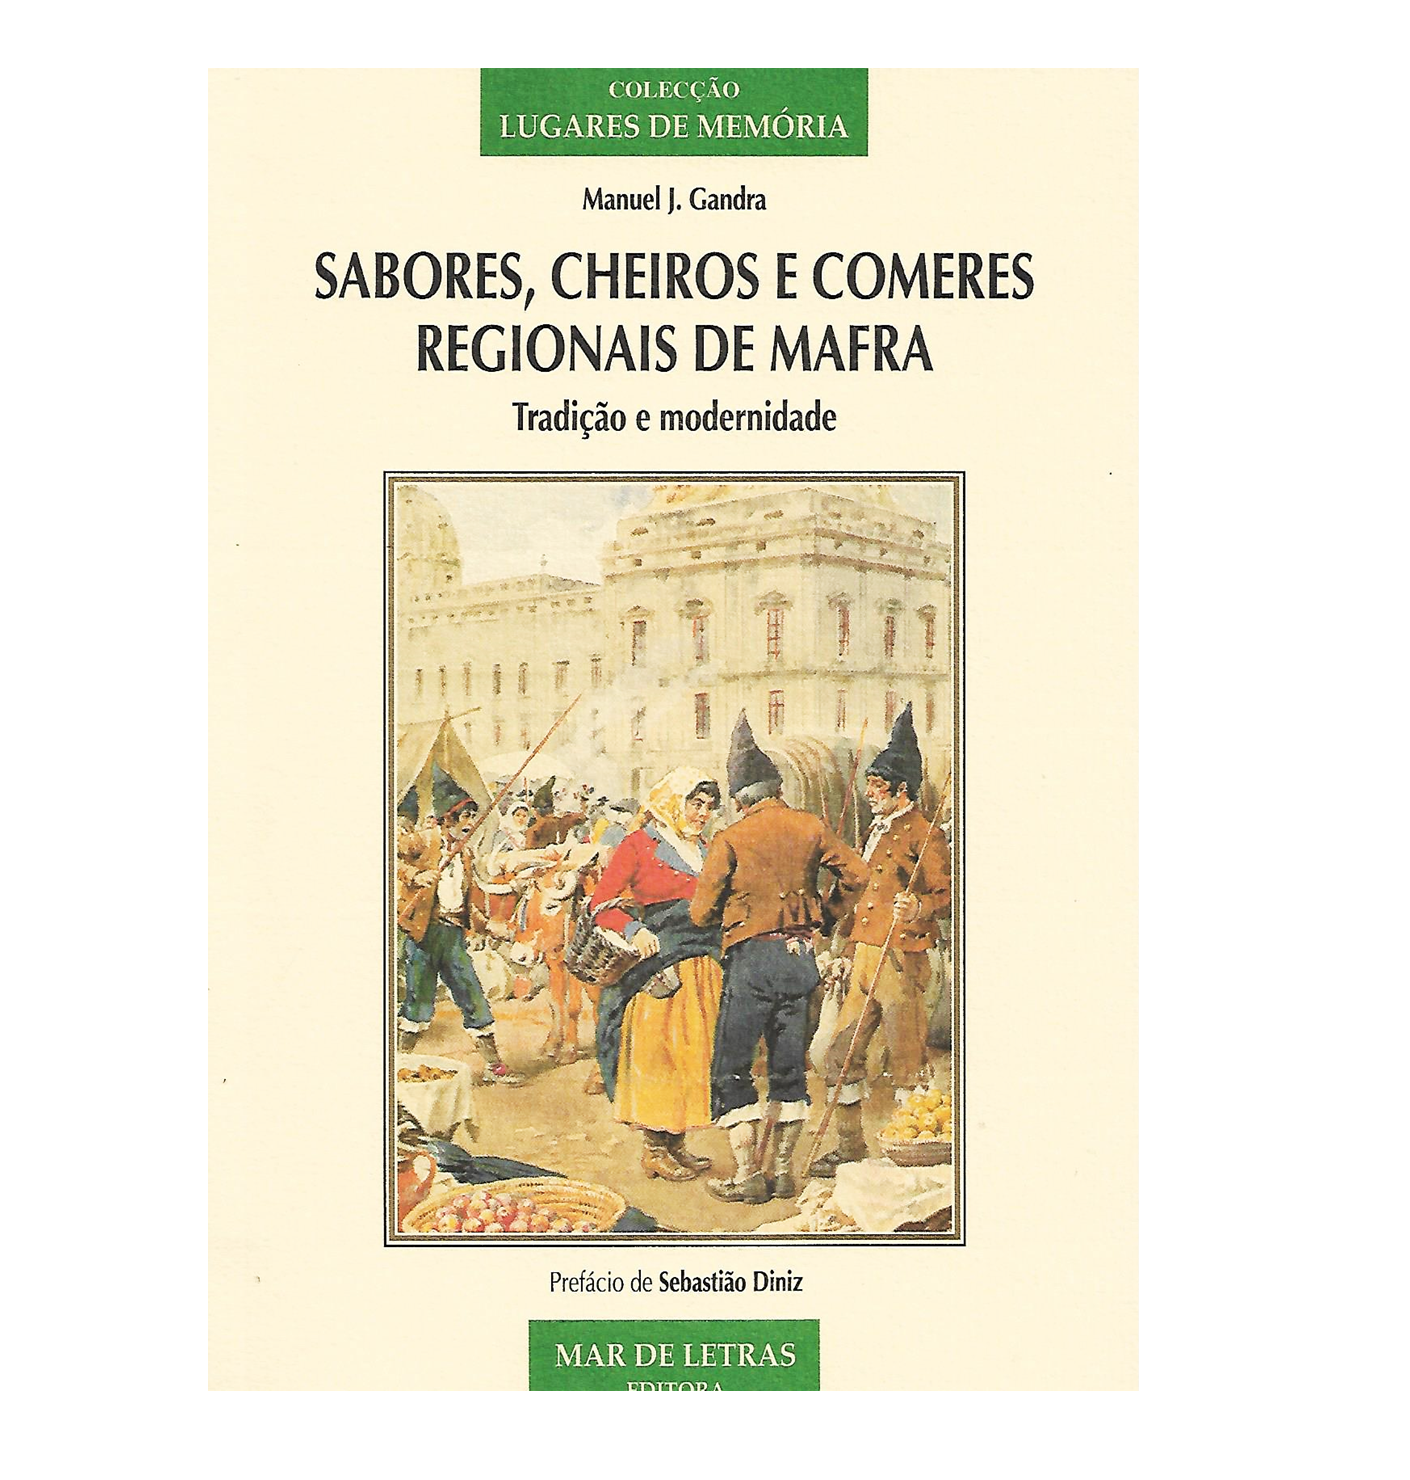 SABORES, CHEIROS E COMERES REGIONAIS DE MAFRA. 